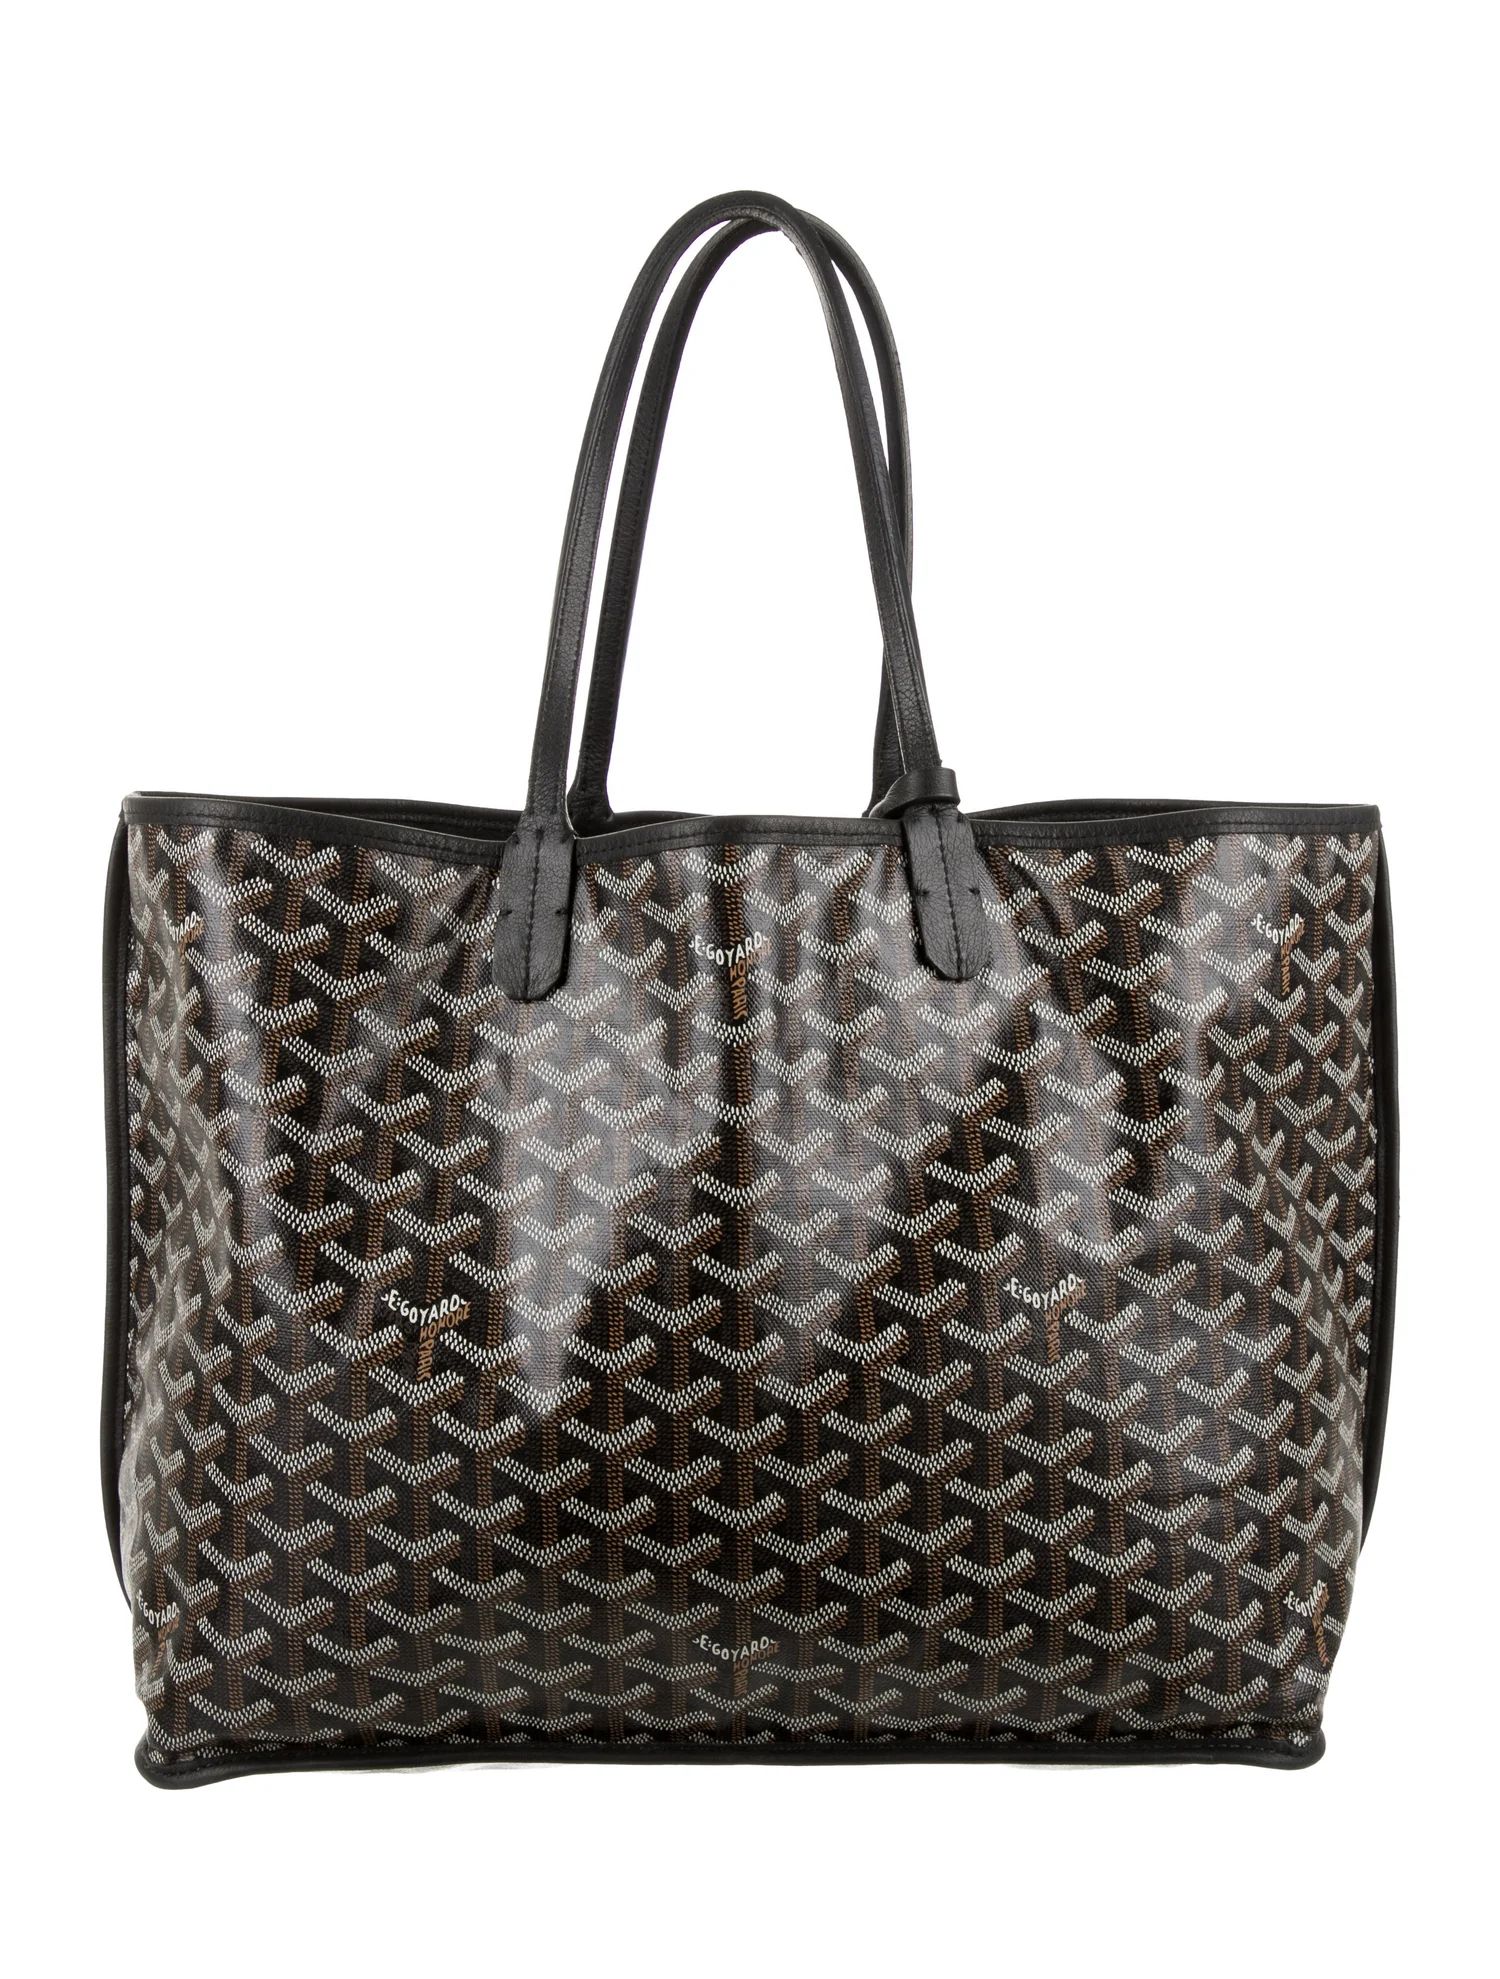 Goyard Reversible Anjou PM w/ Pouch - Handbags -
          GOY24145 | The RealReal | The RealReal